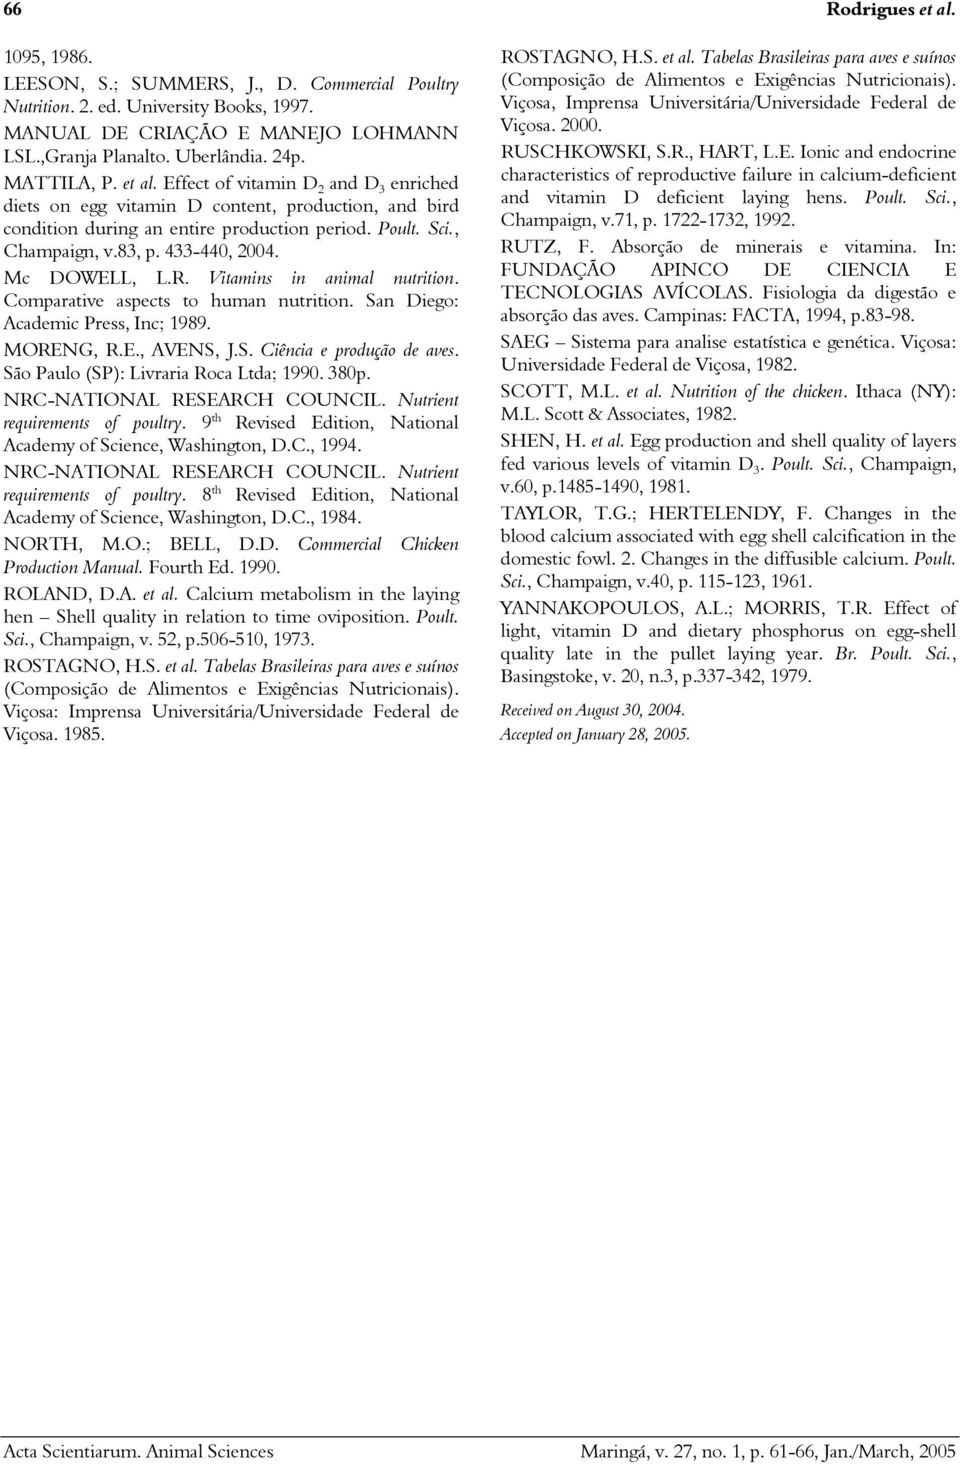 433-440, 2004. Mc DOWELL, L.R. Vitamins in animal nutrition. Comparative aspects to human nutrition. San Diego: Academic Press, Inc; 1989. MORENG, R.E., AVENS, J.S. Ciência e produção de aves.